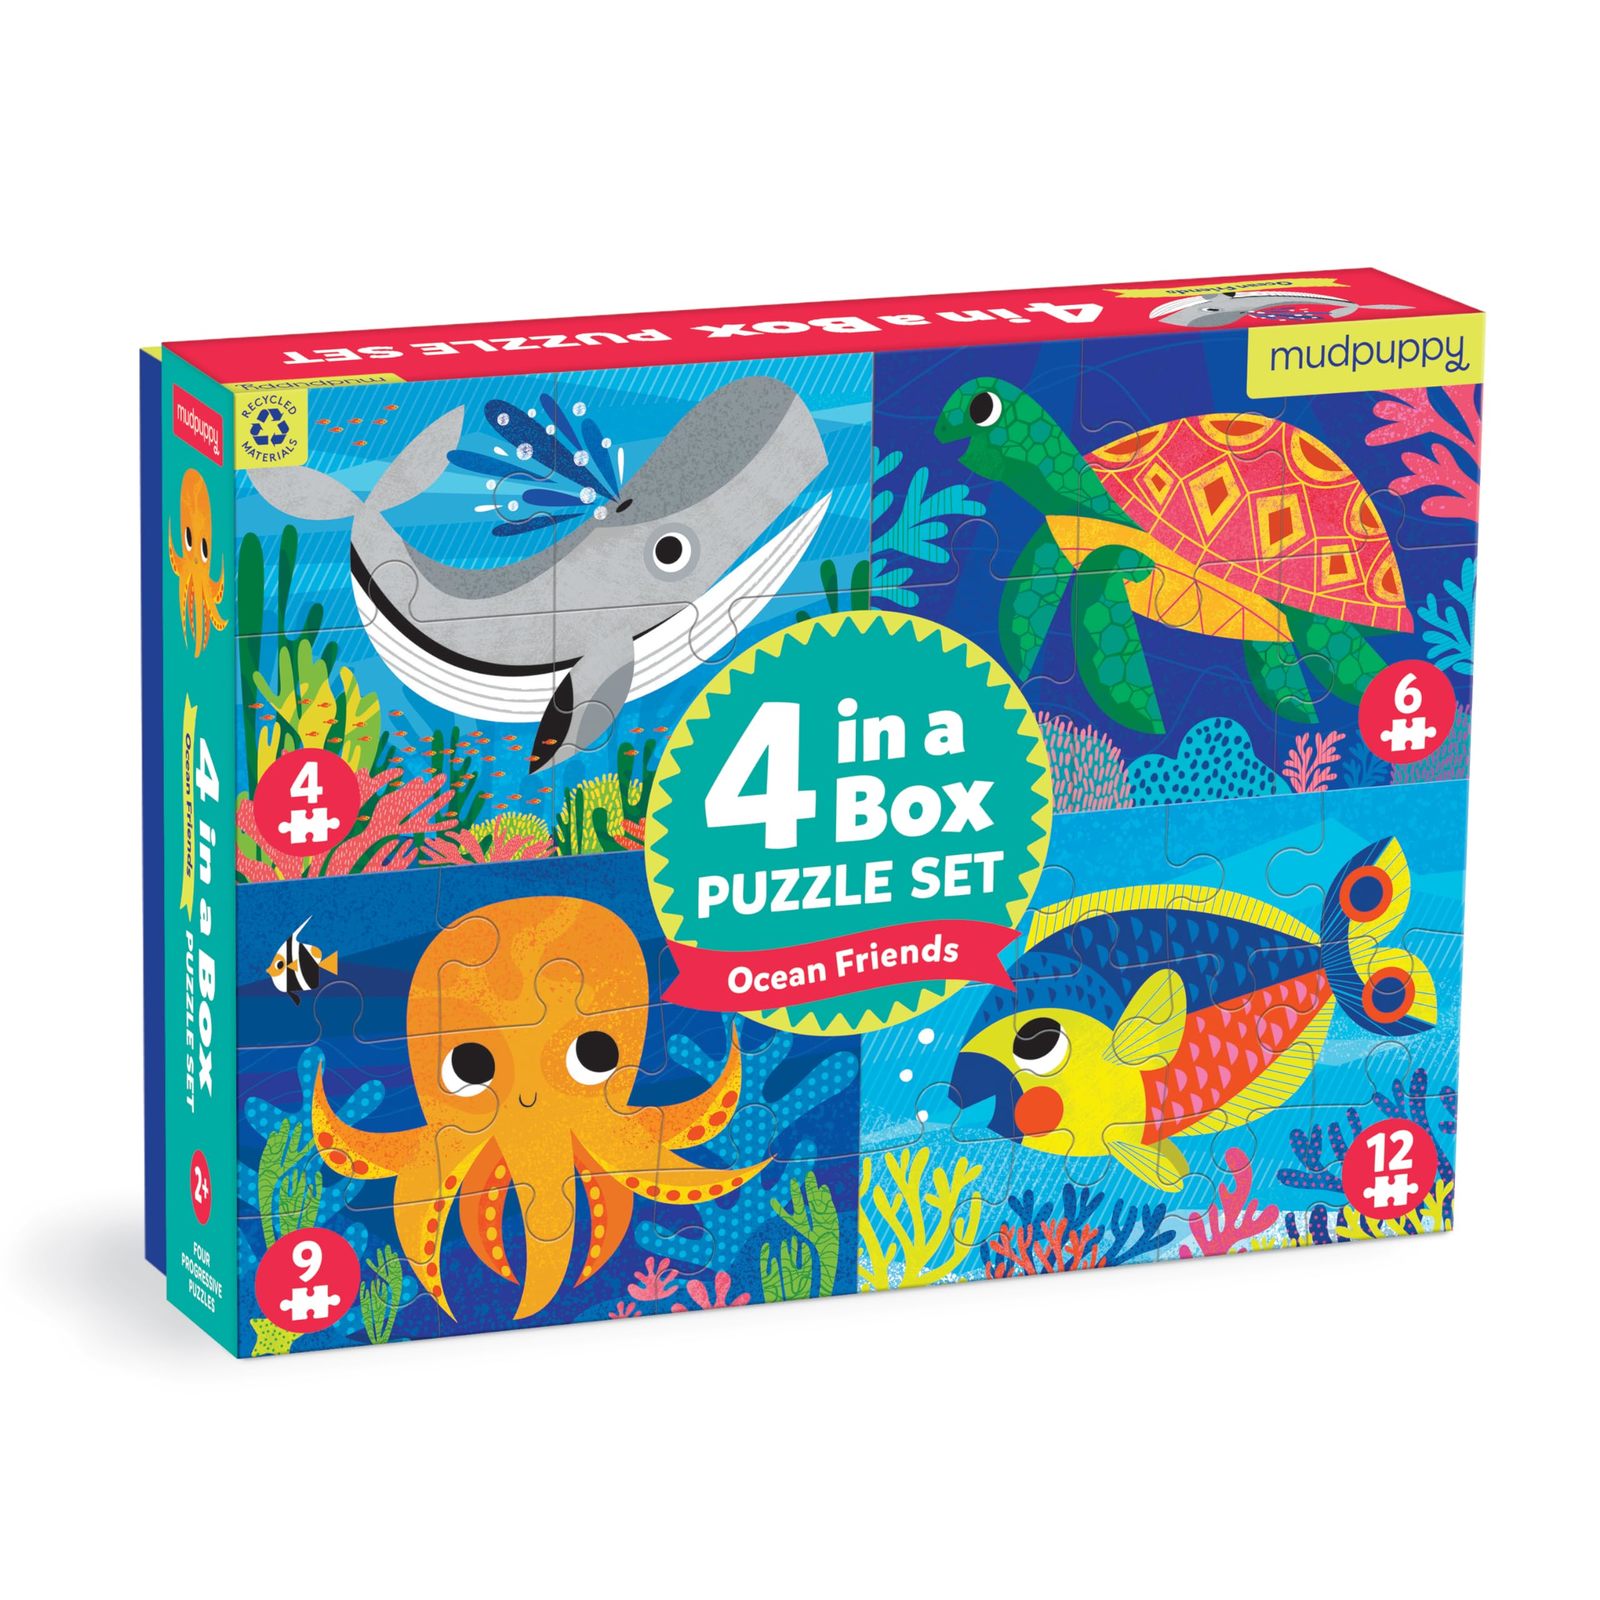 Mudpuppy Ocean Friends 4-in-a-Box Puzzle Set from Mudpuppy, Includes 4 Progressi - $12.26